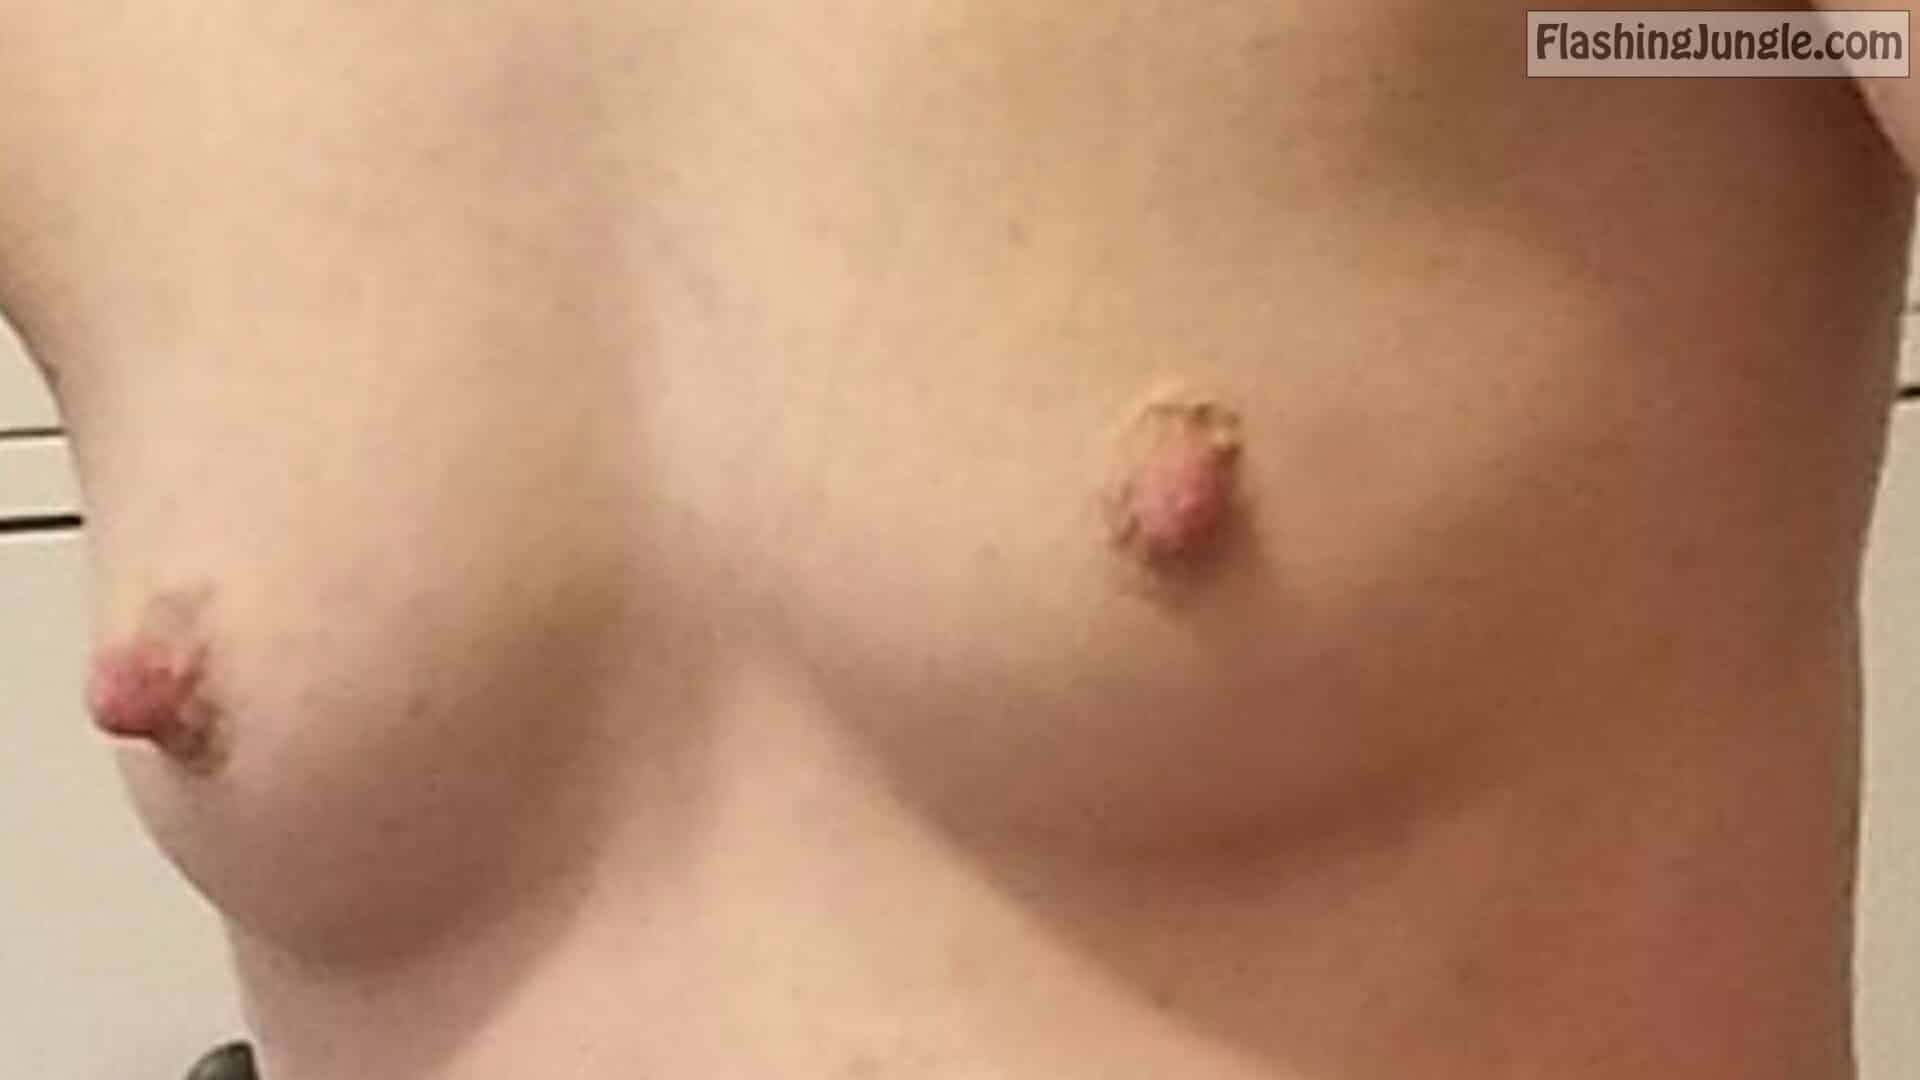 Real Amateurs Boobs Flash Pics - Amber Small Tits Erected Nips Close Up